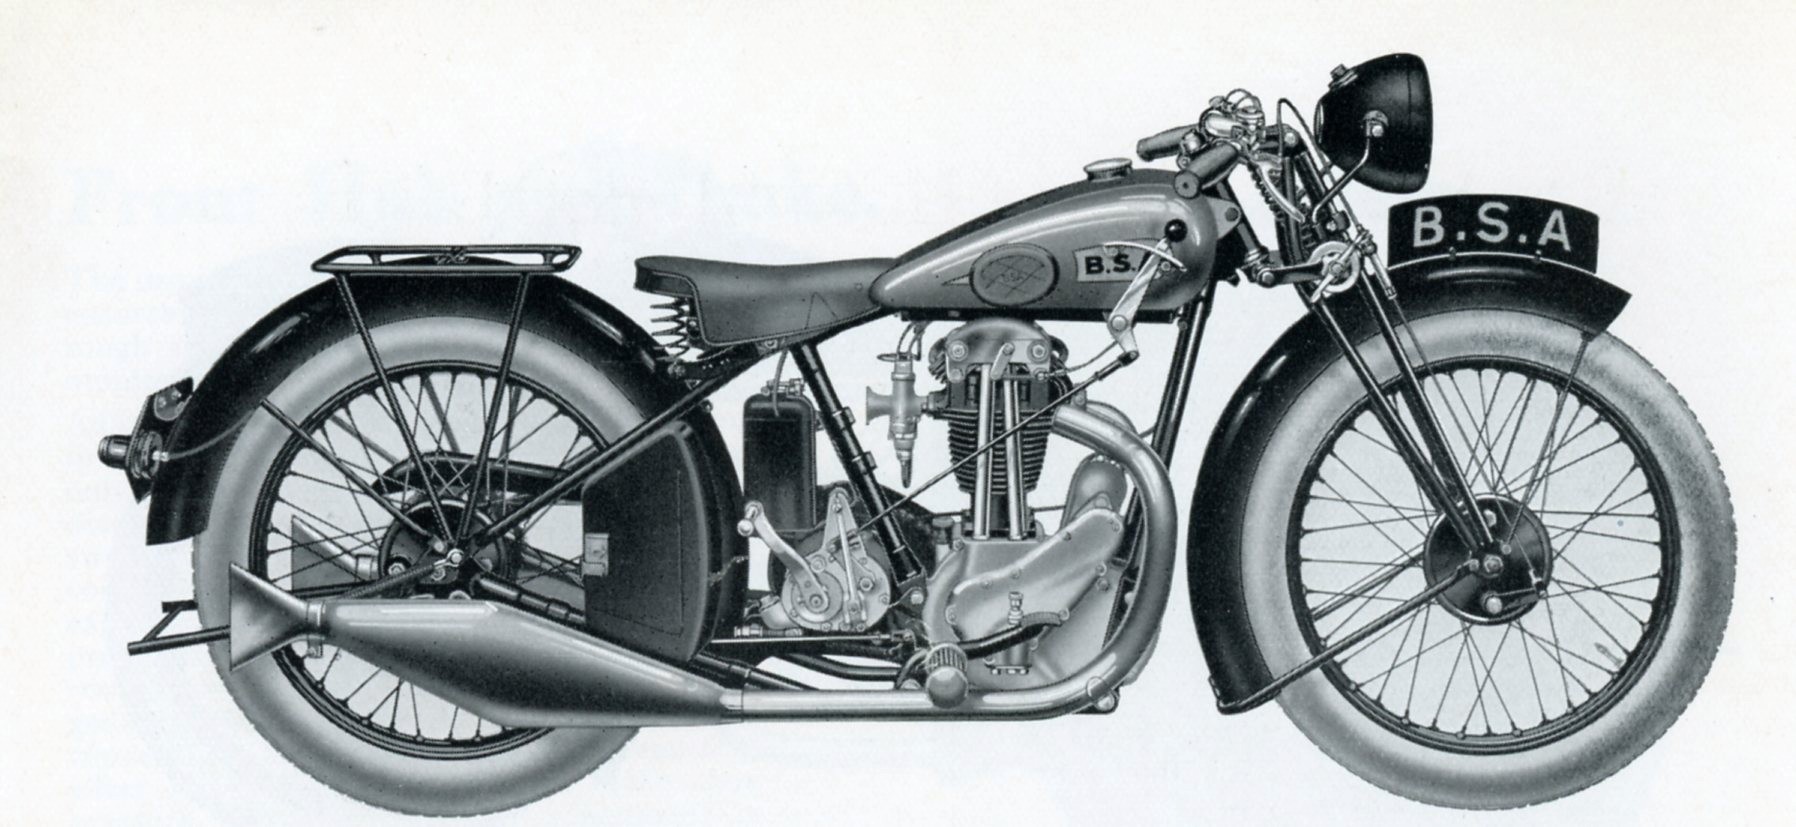 Мотоцикл BSA B 30 1930